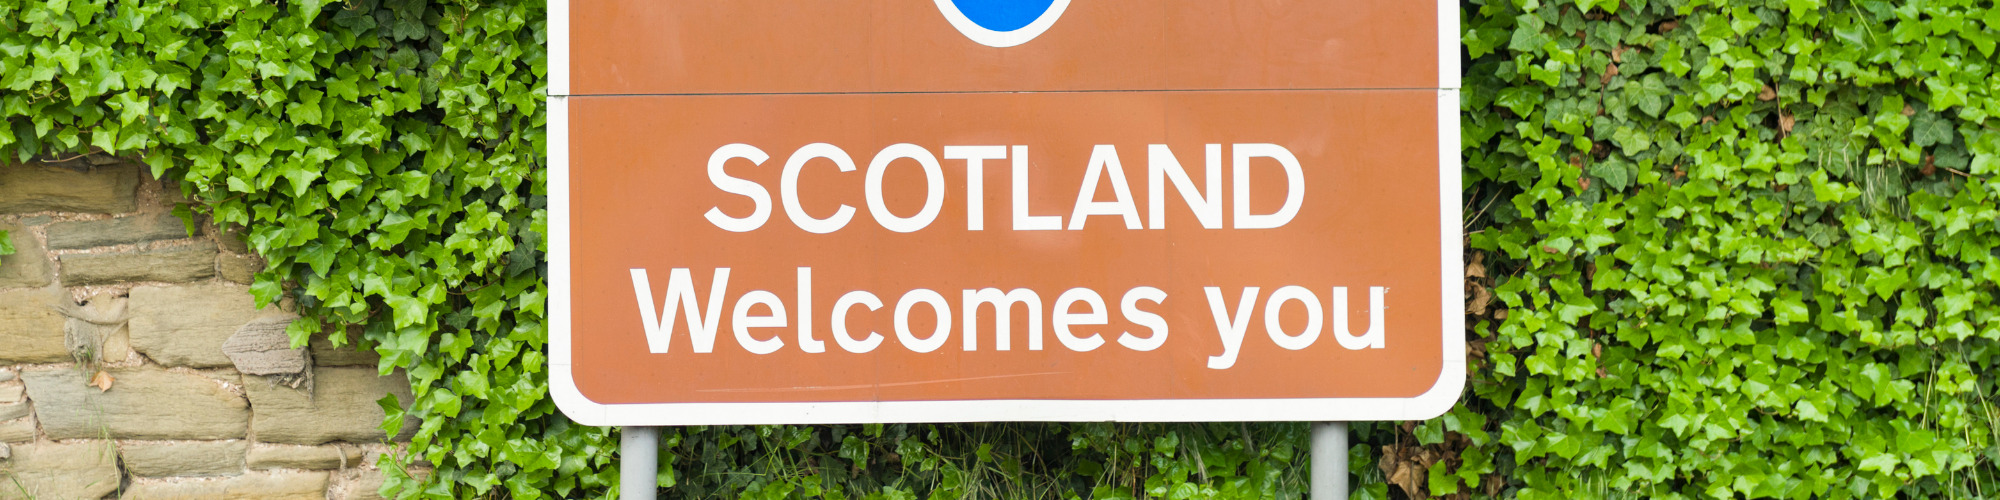 Cohabitation Law in Scotland - What Next?